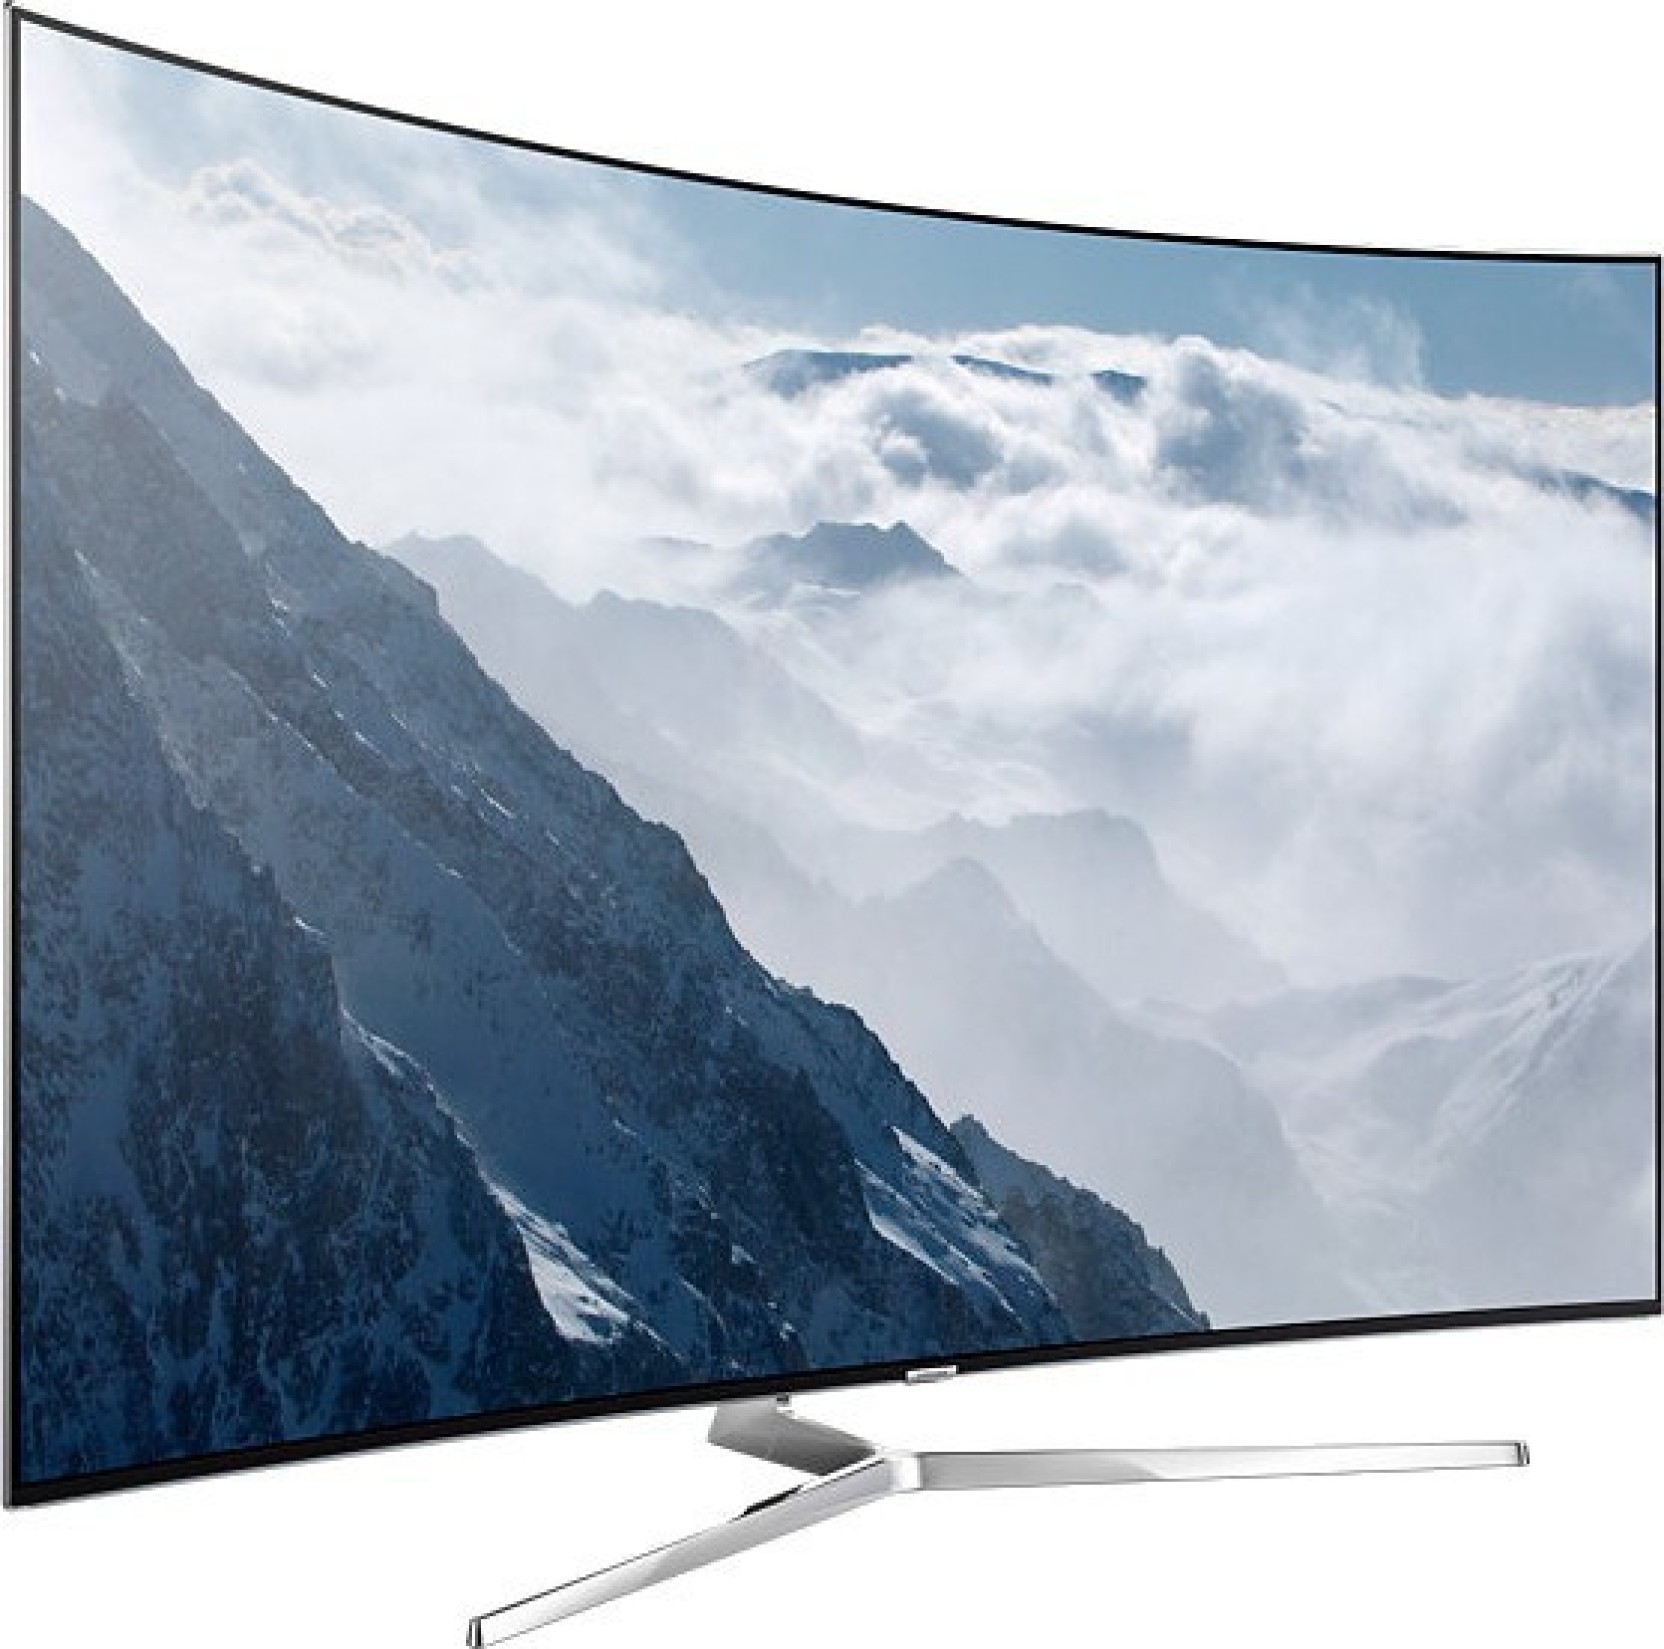 Samsung 138cm (55 inch) Ultra HD (4K) Curved LED Smart TV